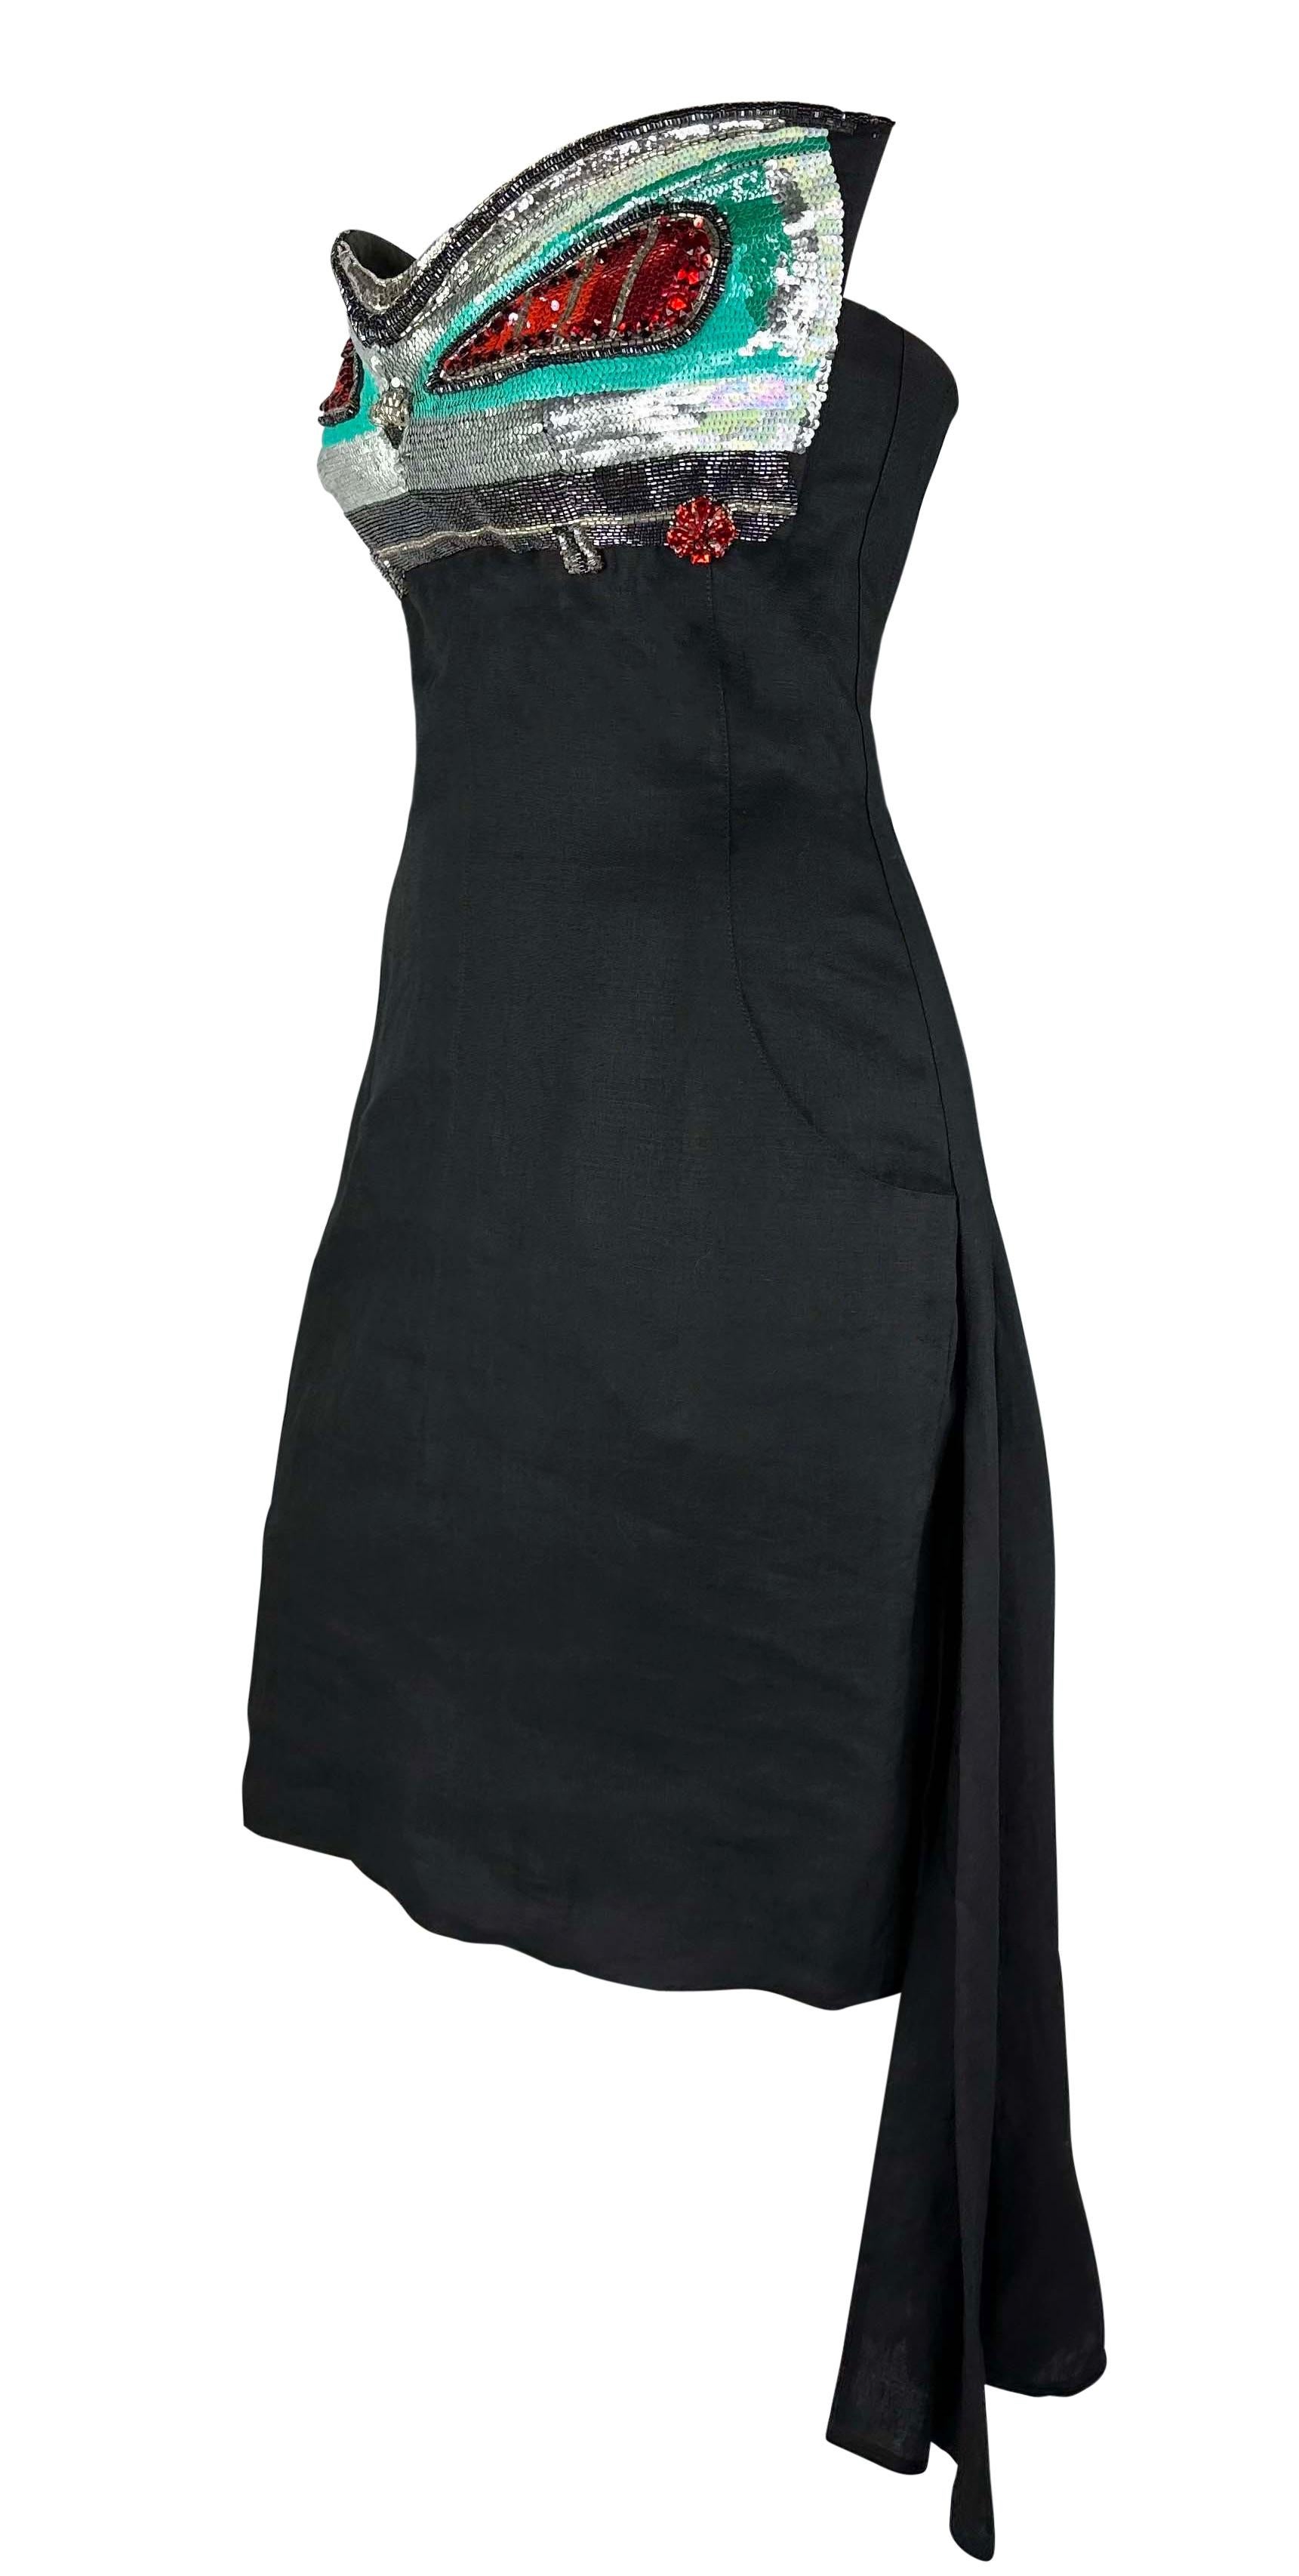 S/S 1987 Karl Lagerfeld Runway  Taillight Rhinestone Sequin Black Dress For Sale 2